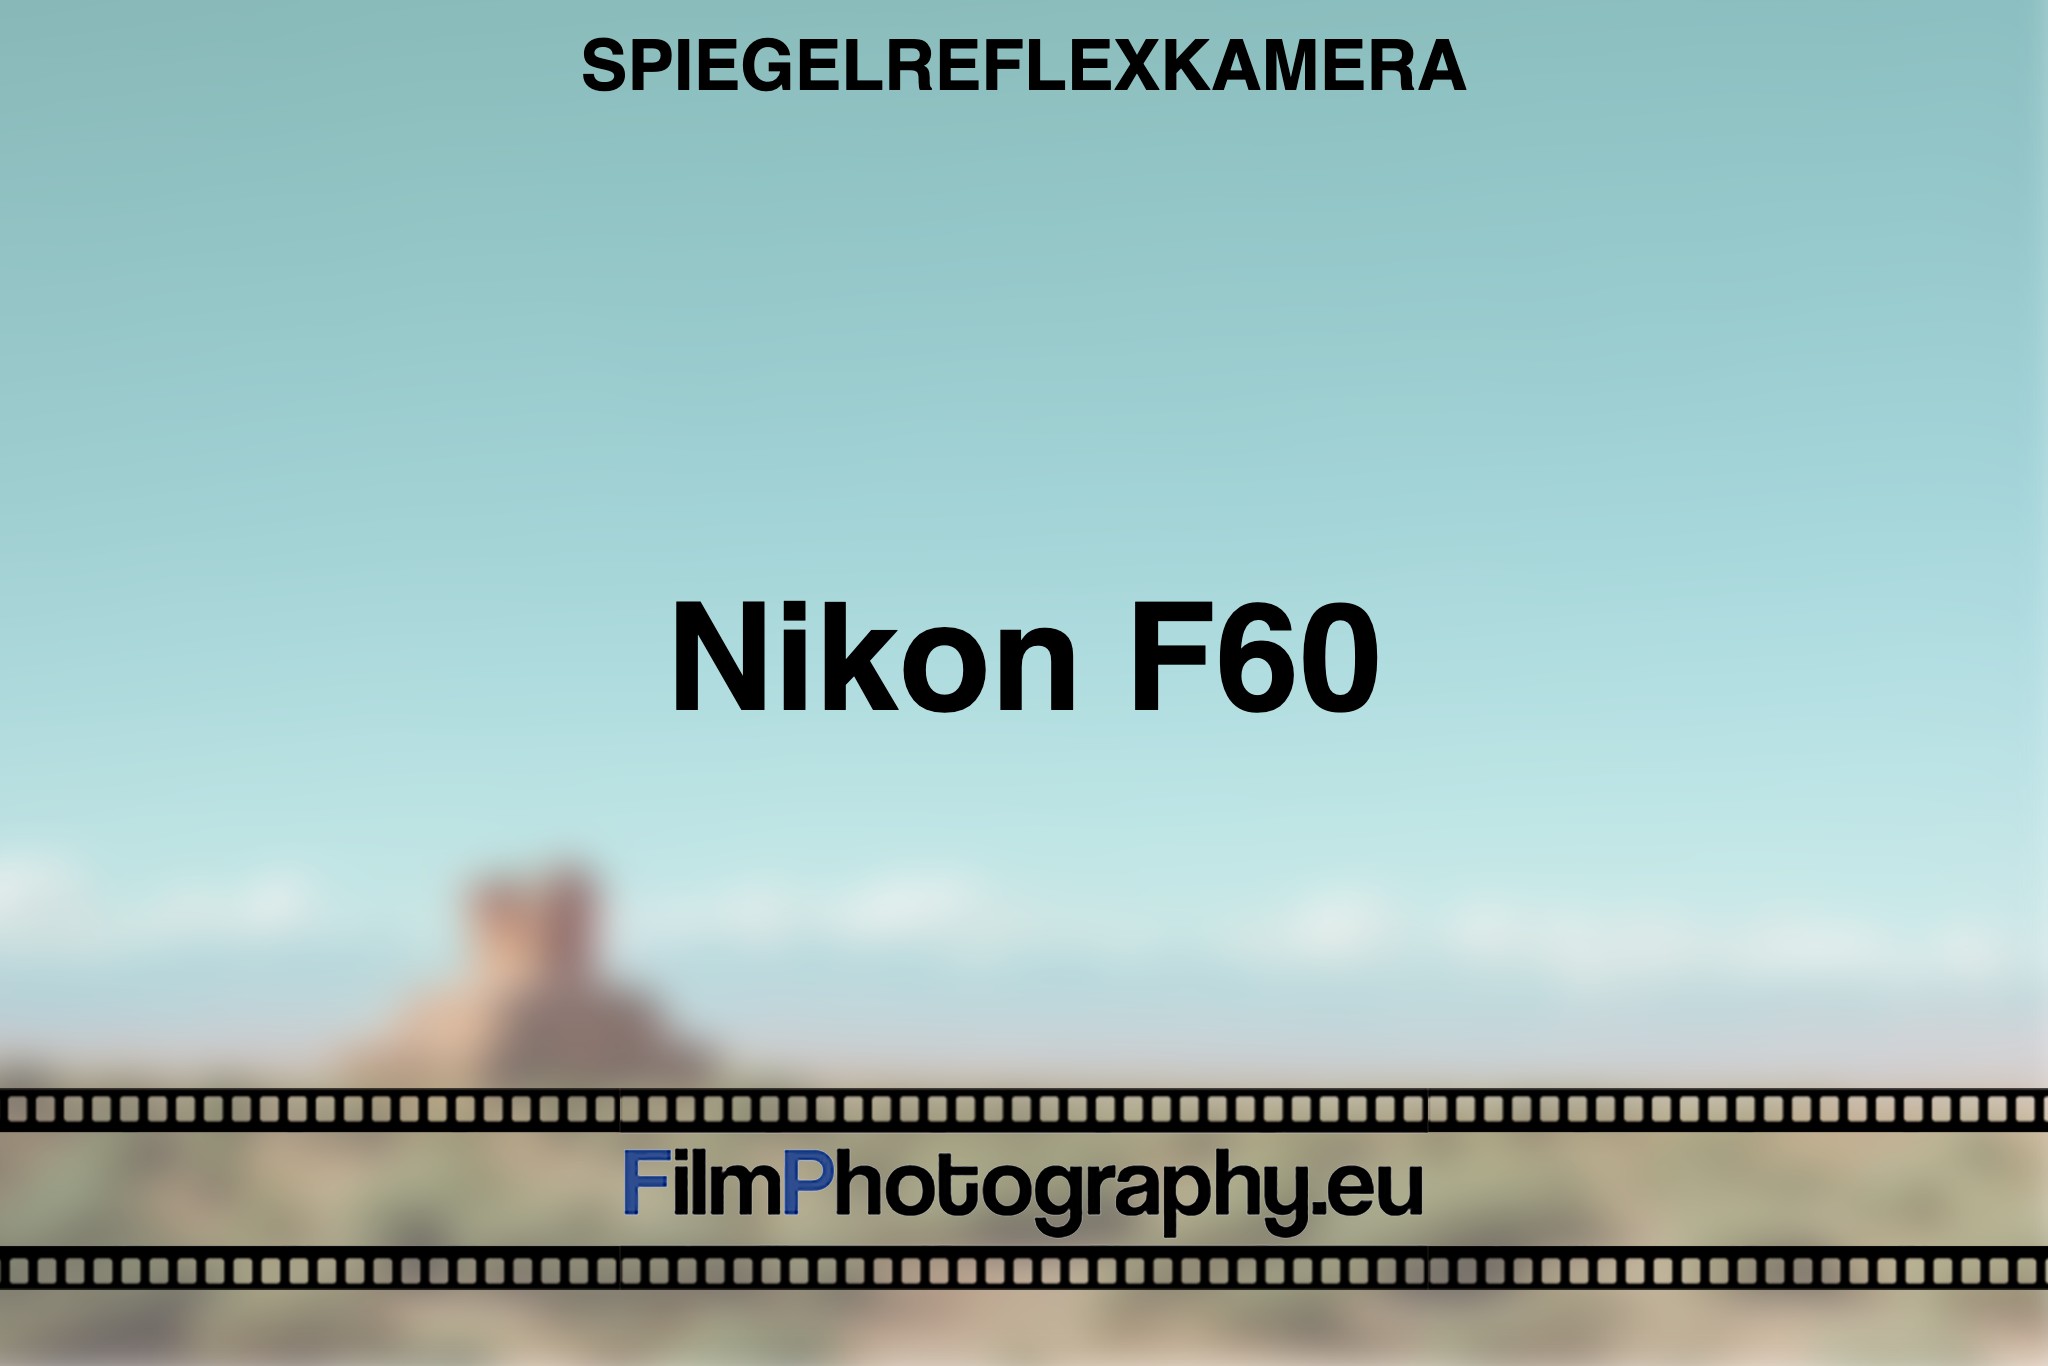 nikon-f60-spiegelreflexkamera-bnv